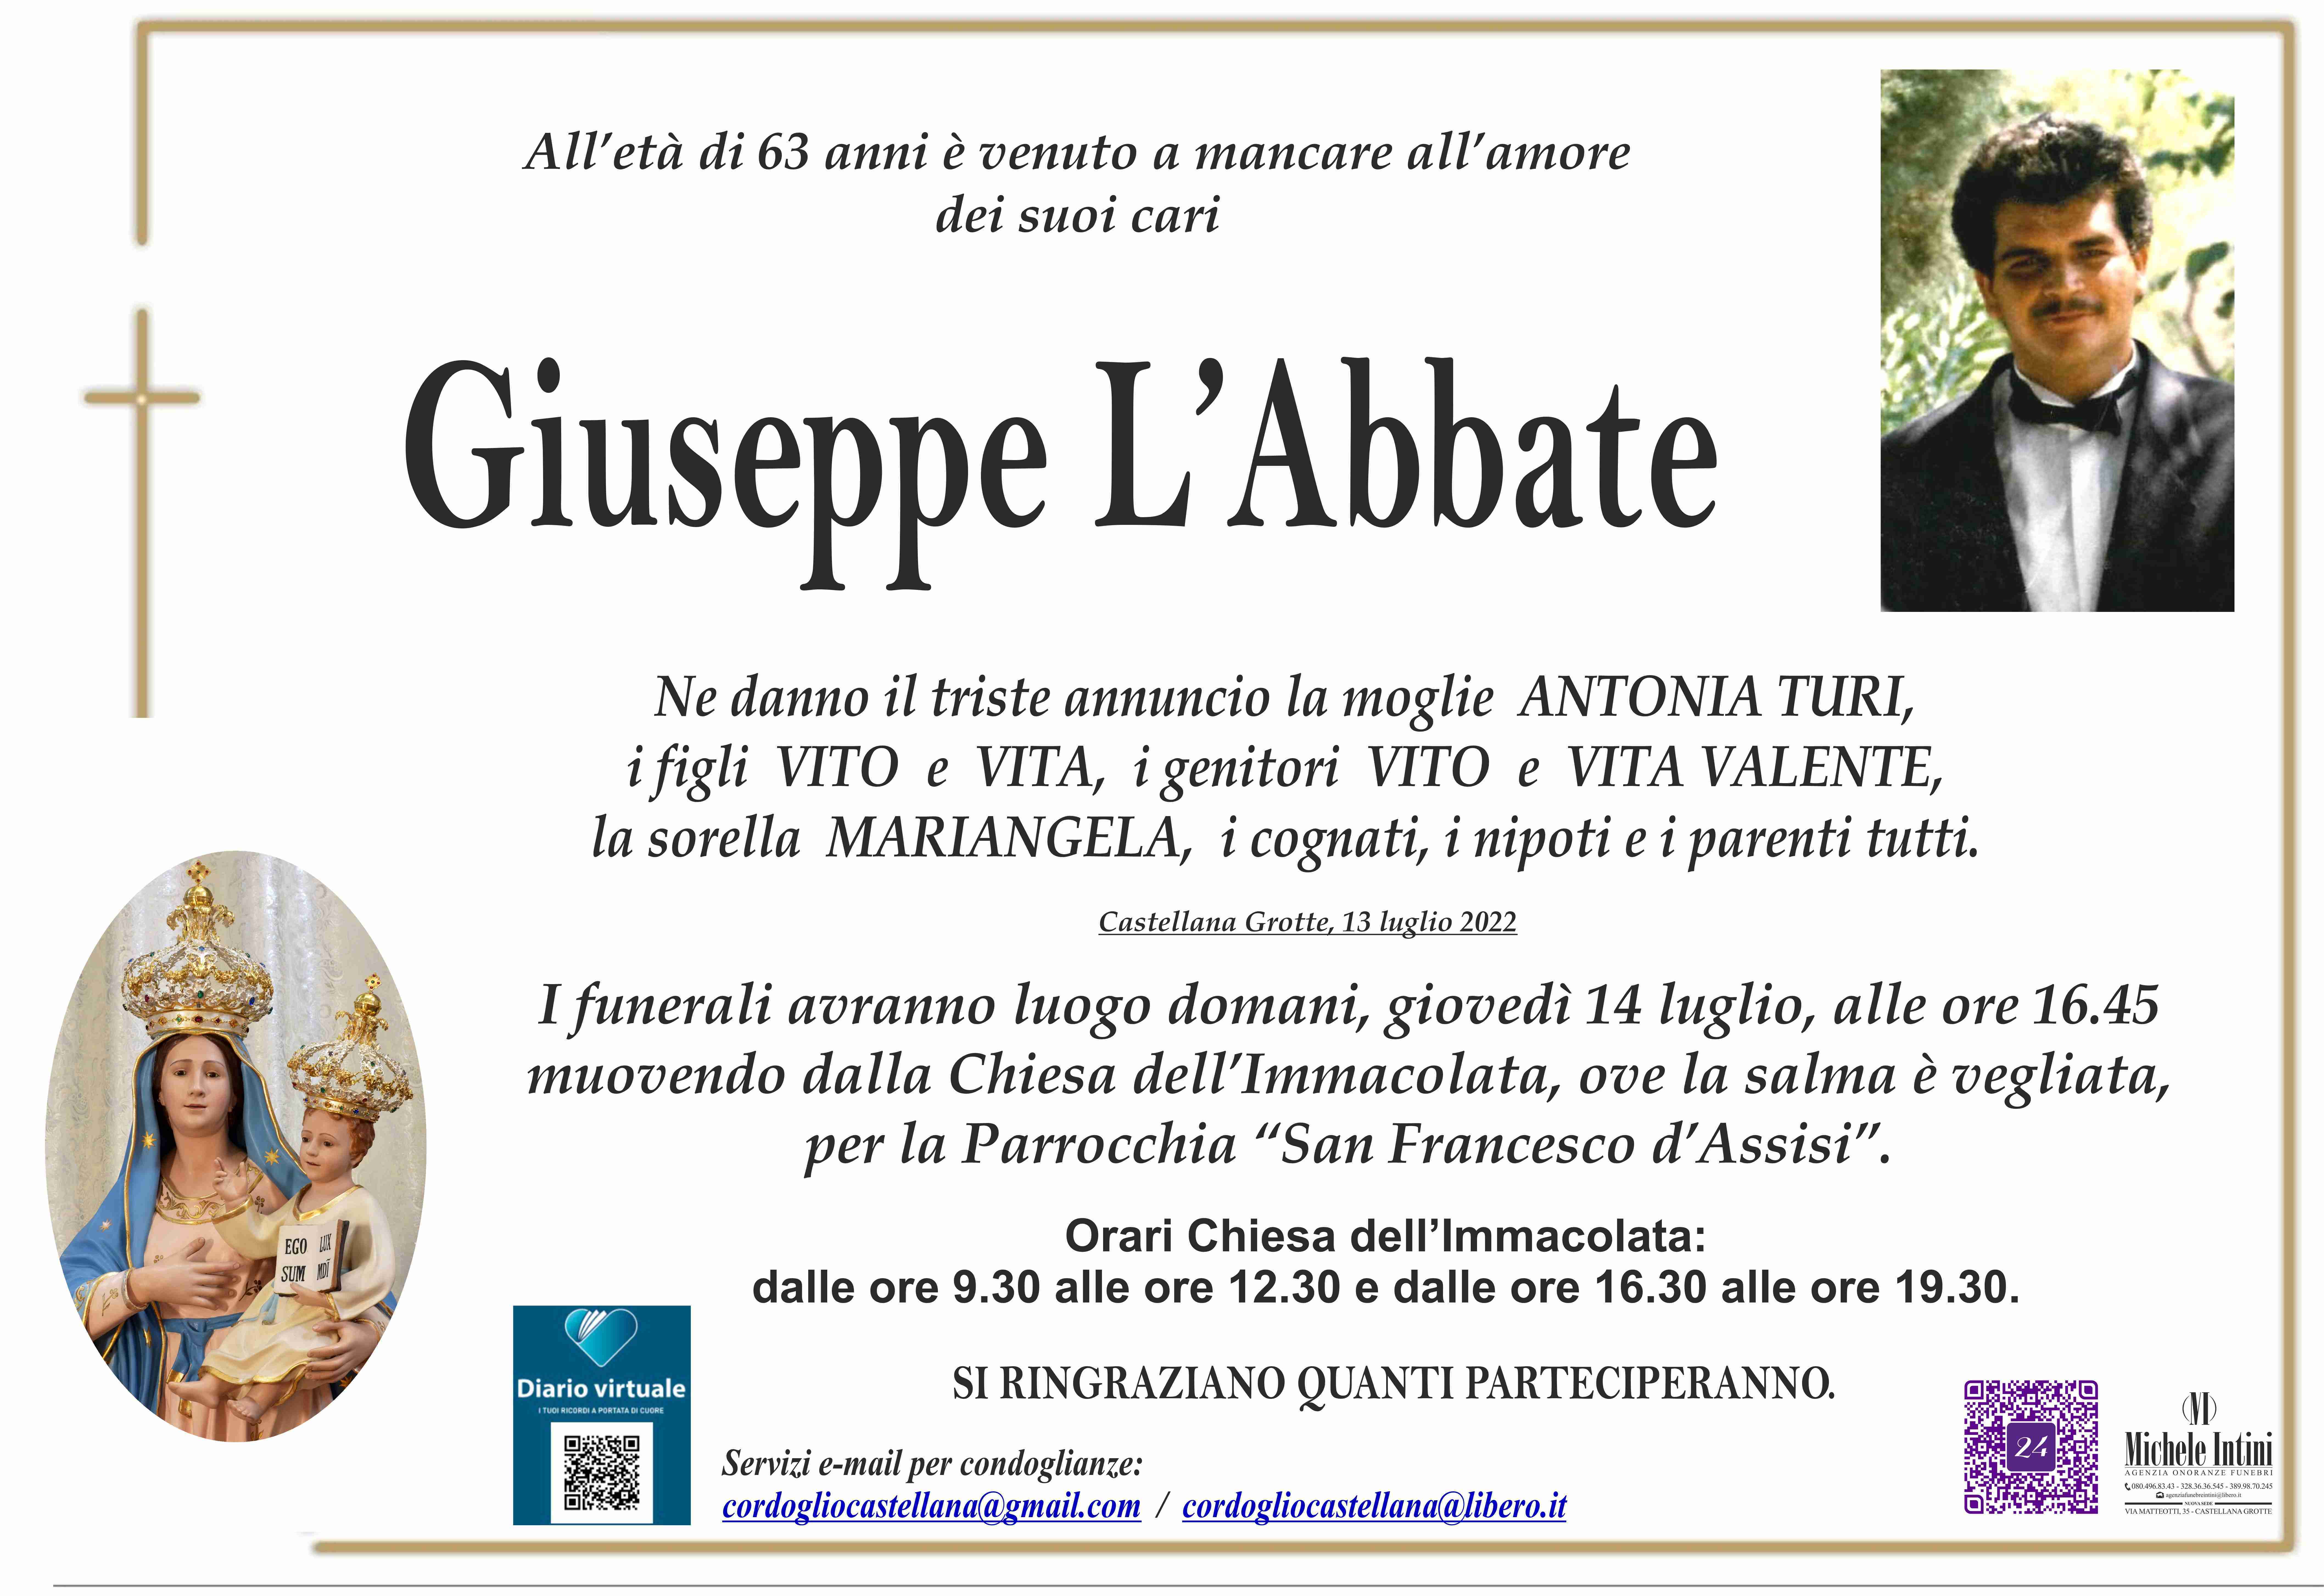 Giuseppe L'Abbate